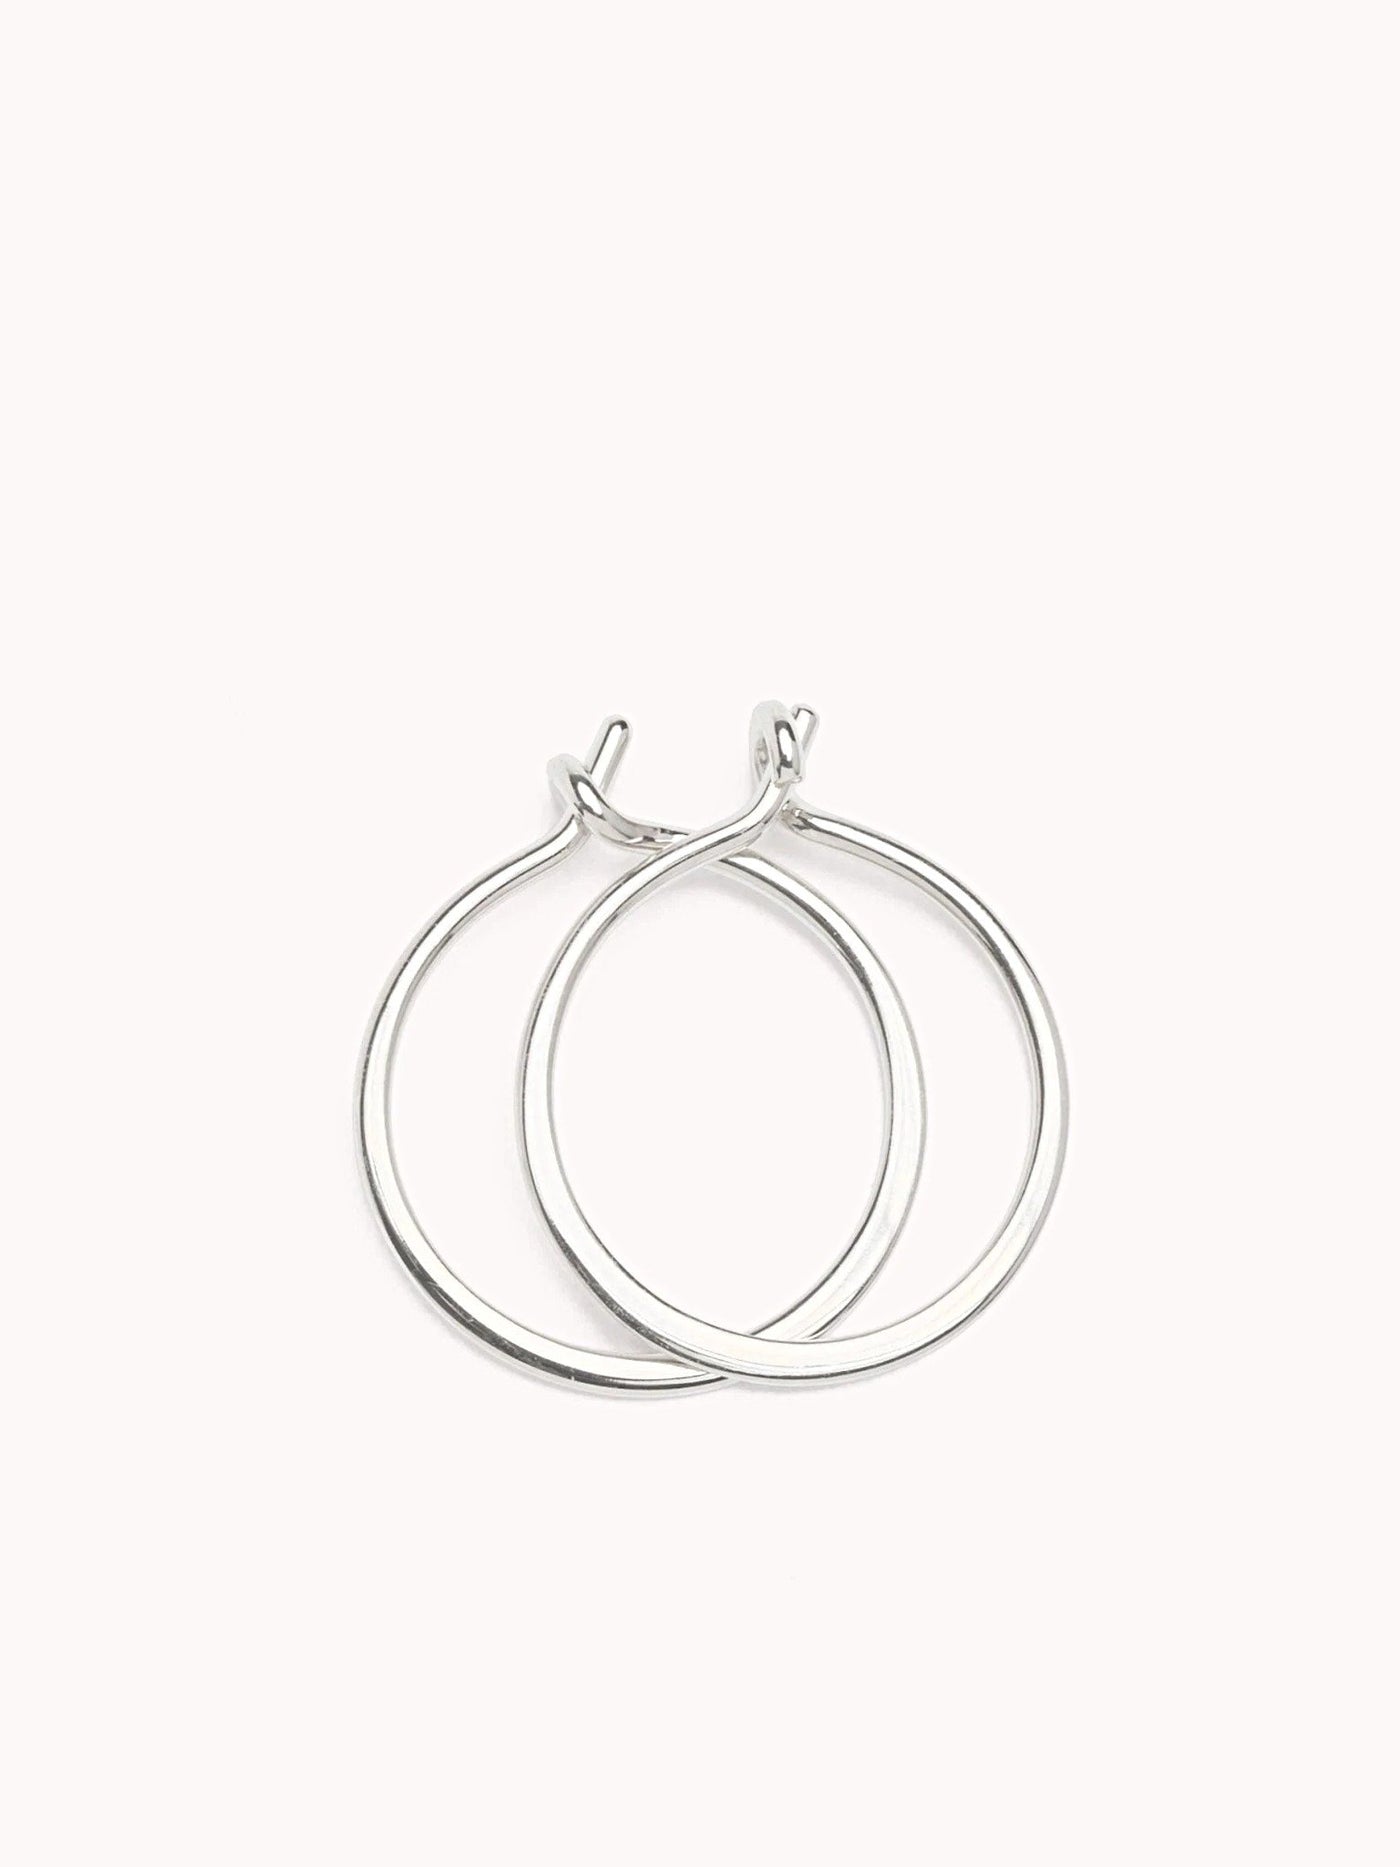 Deepa Hoop Earrings - 925 Silver OxideBackUpItemsBlack Friday JewelryLunai Jewelry